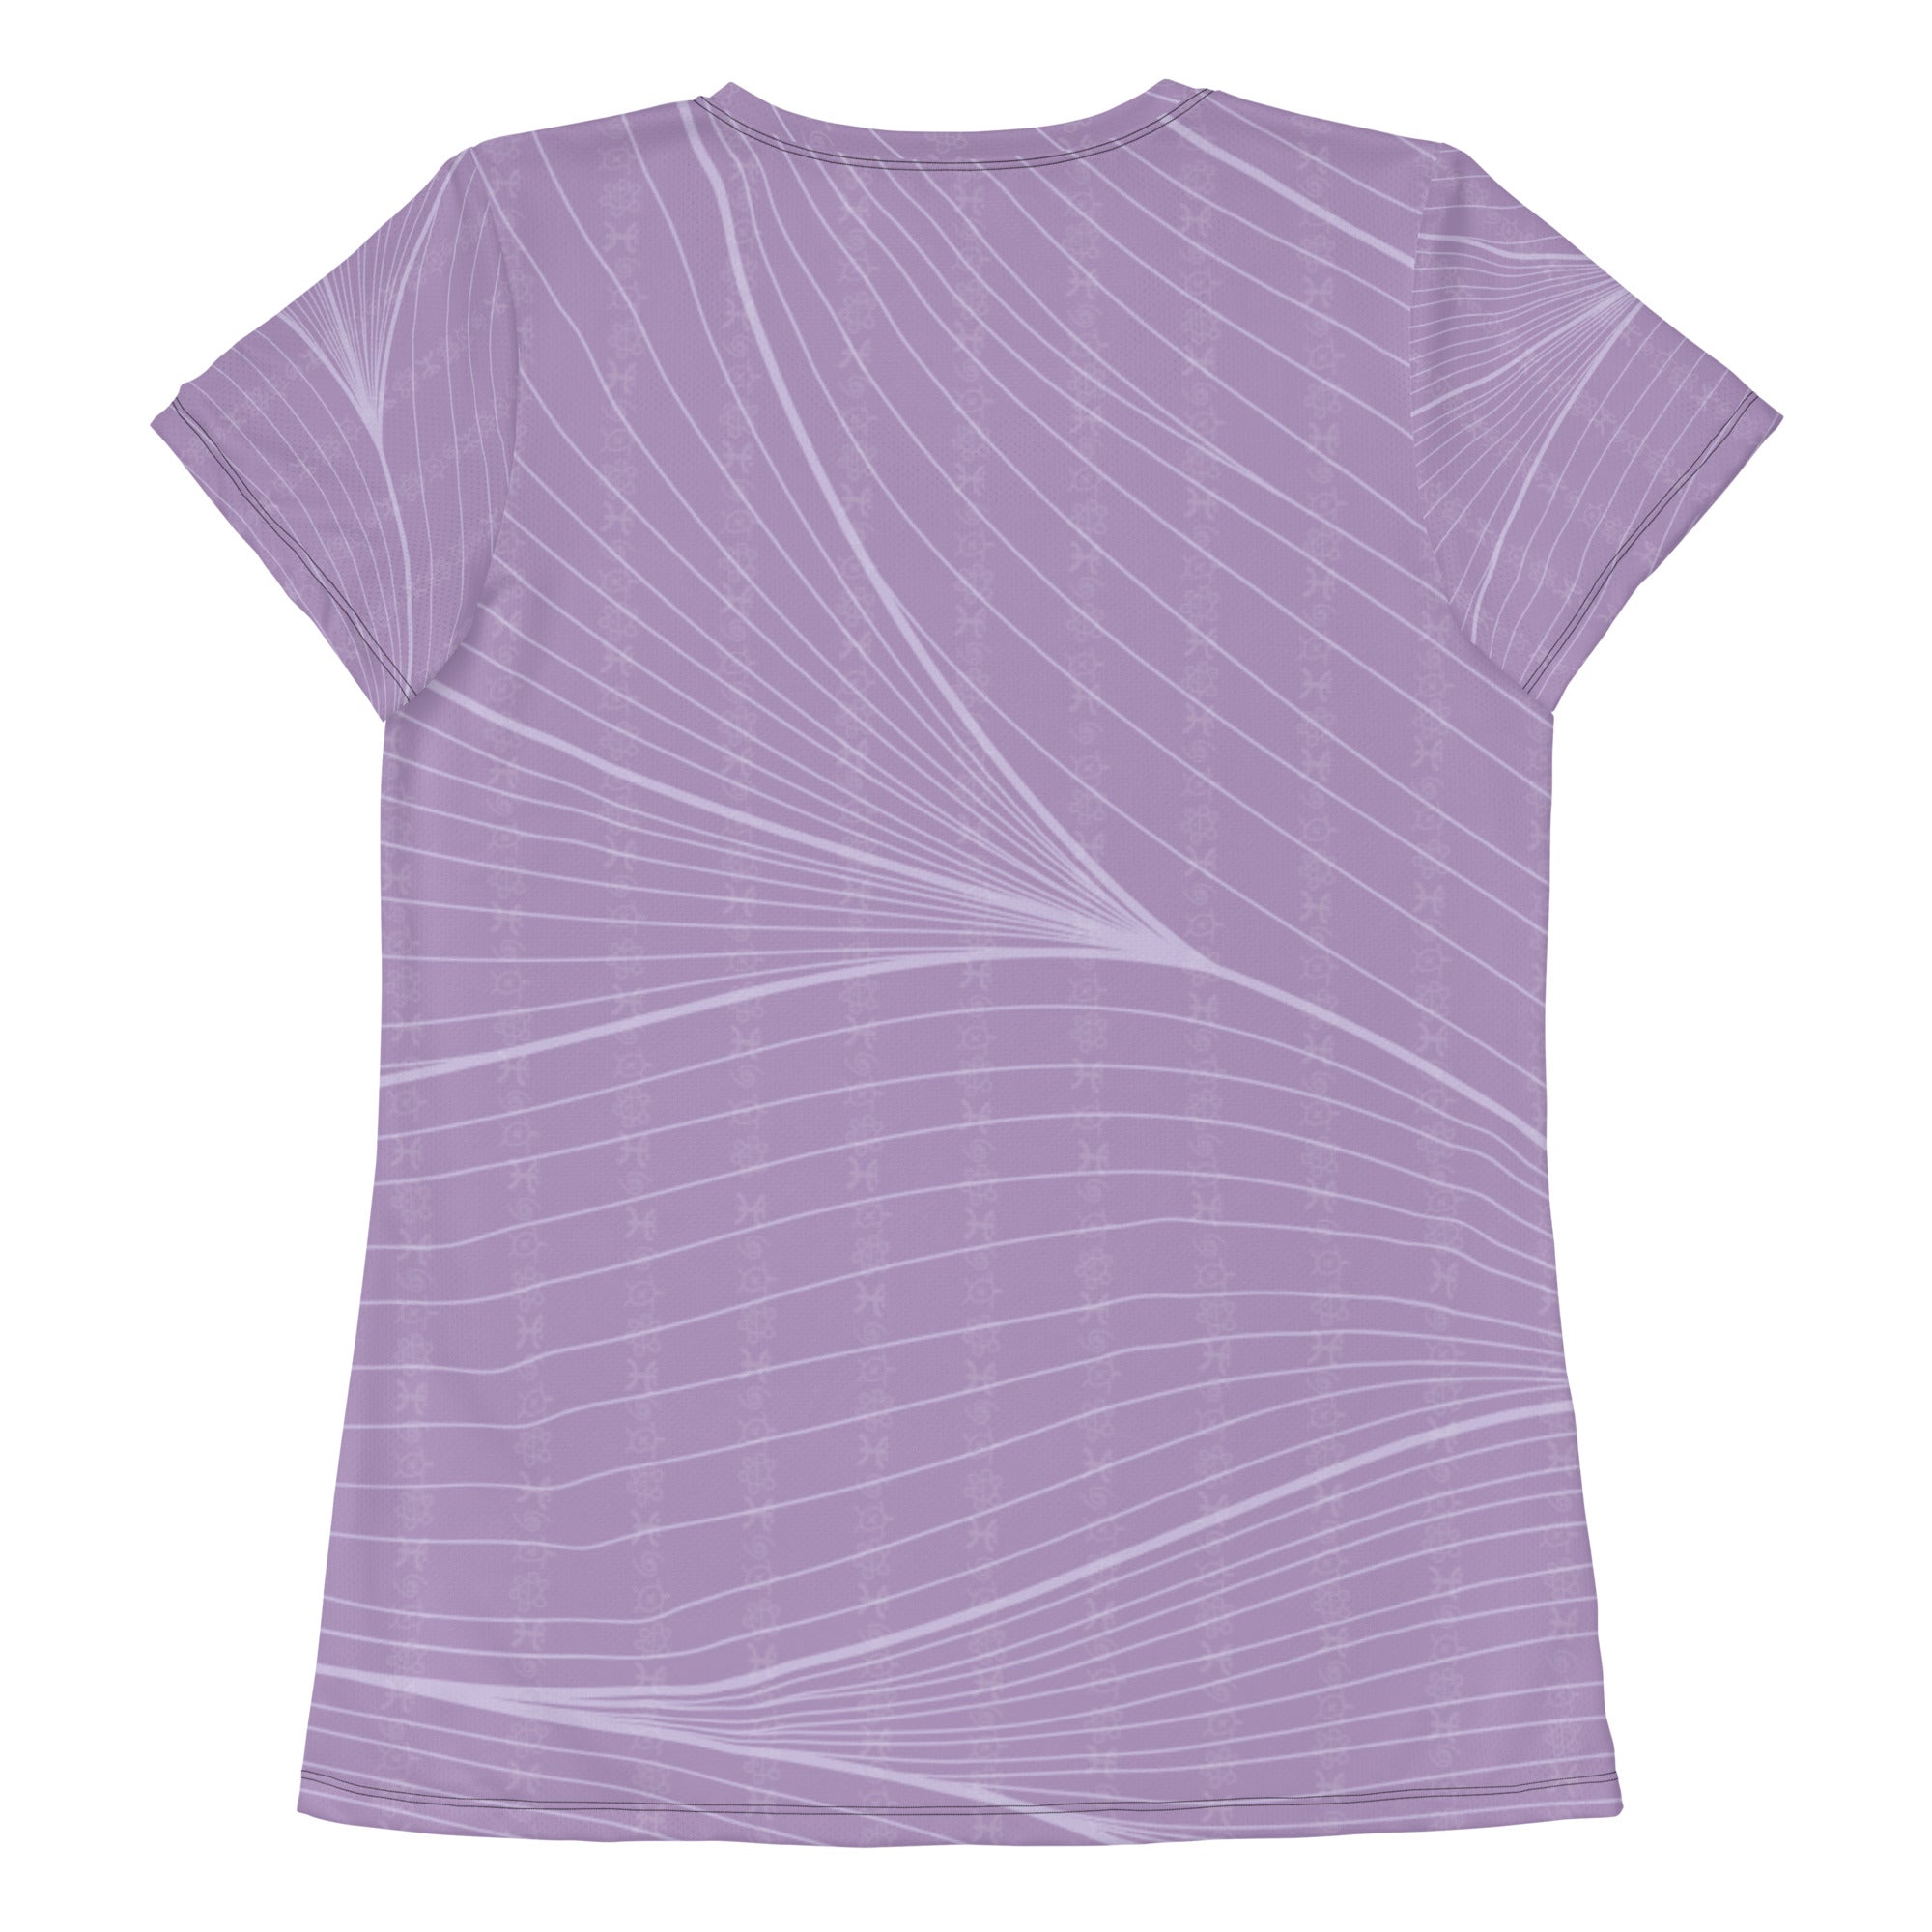 AGAD Tribal Women's Short Sleeve (Violet)